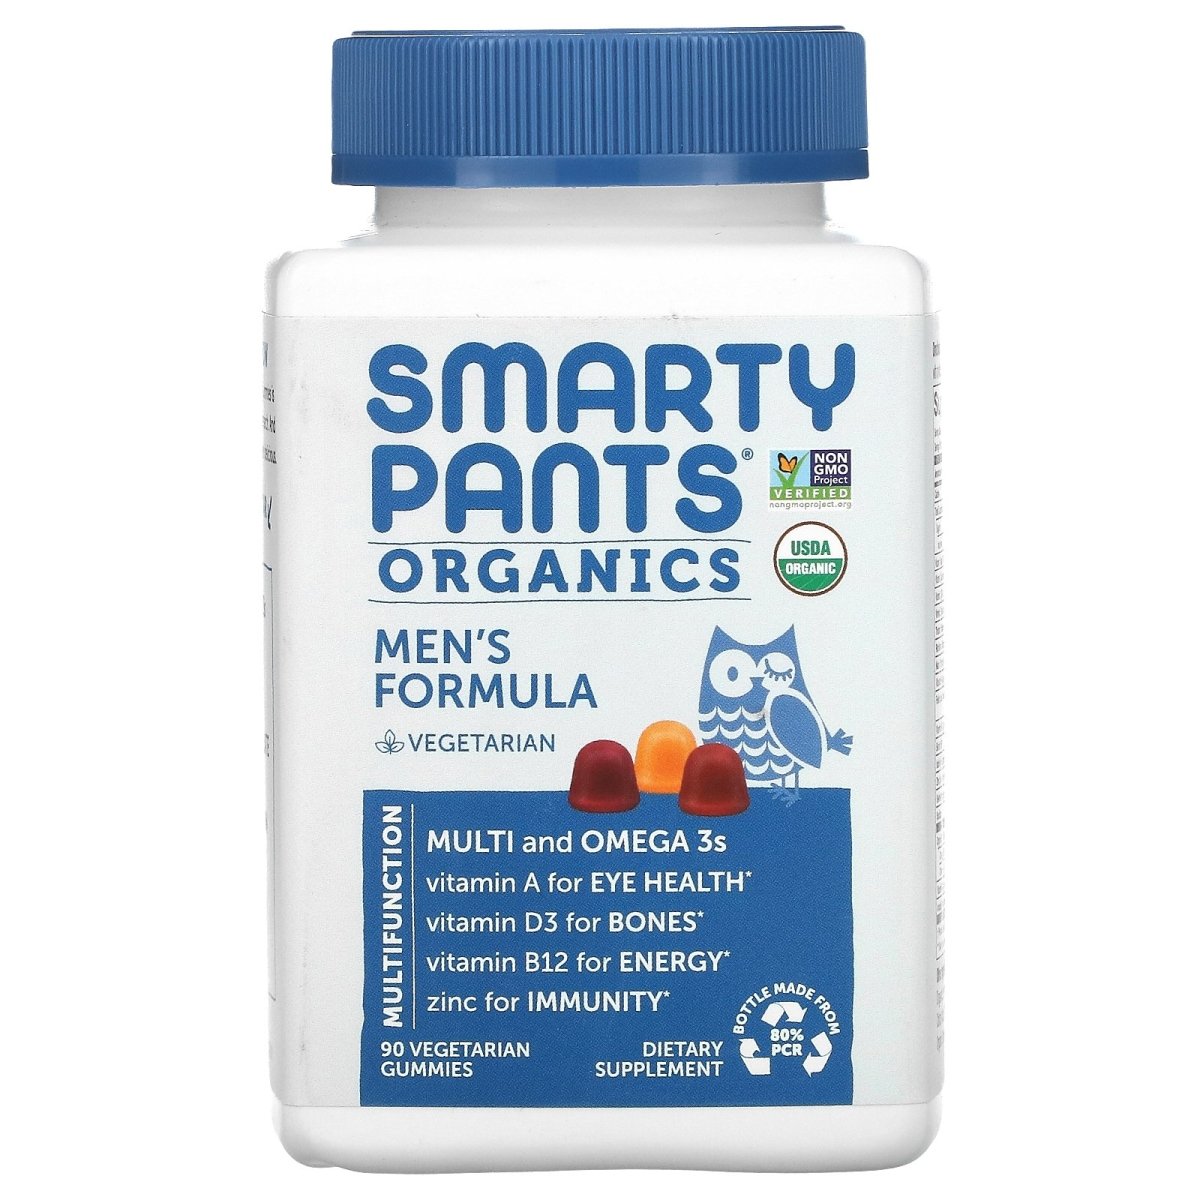 Organic Men's Formula - SmartyPants - Win in Health